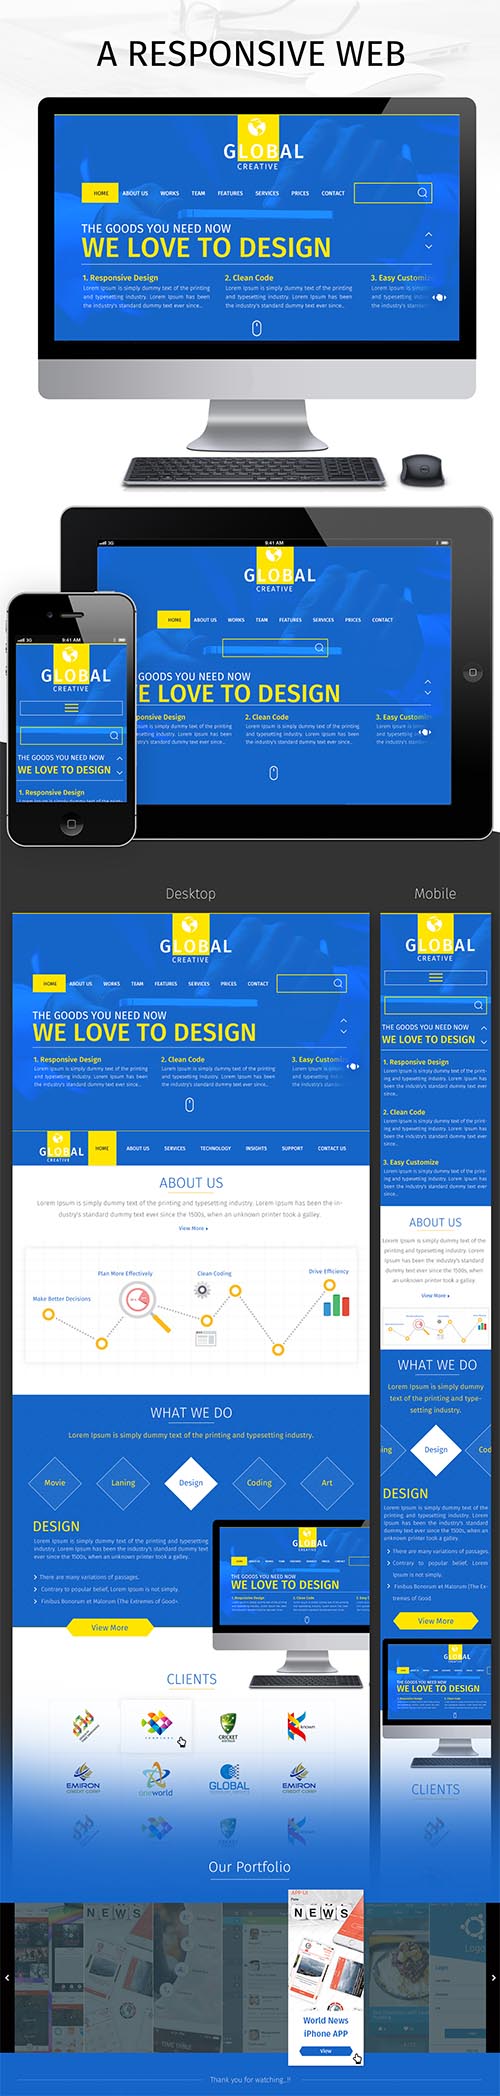 Responsive Website UI & UX Inspiration Design By Nelli Ramu